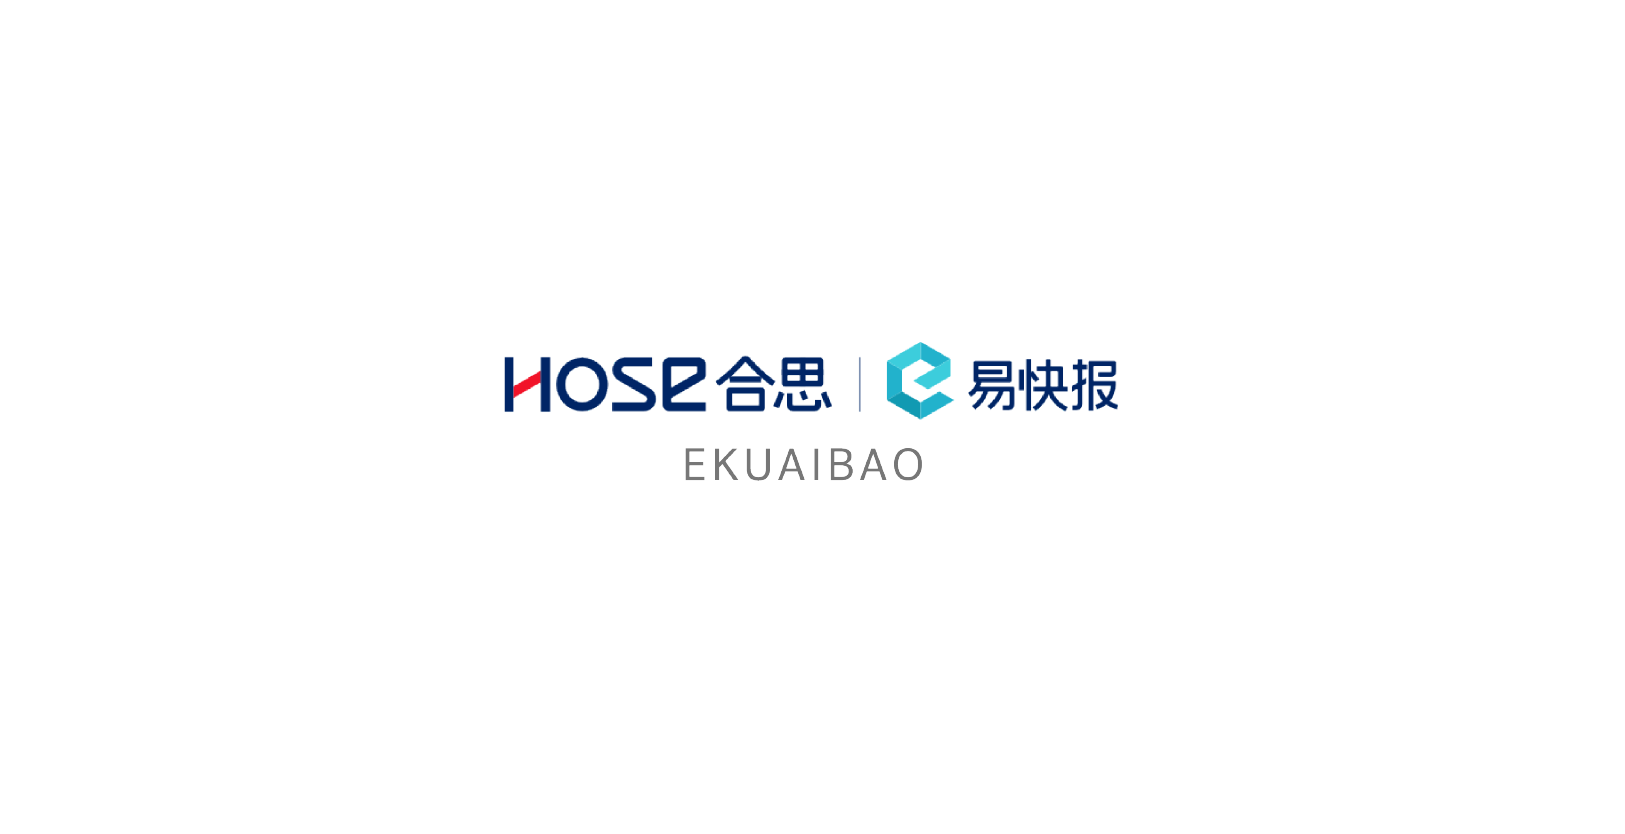 Vision Fund investment portfolio company Ekuaibao's logo